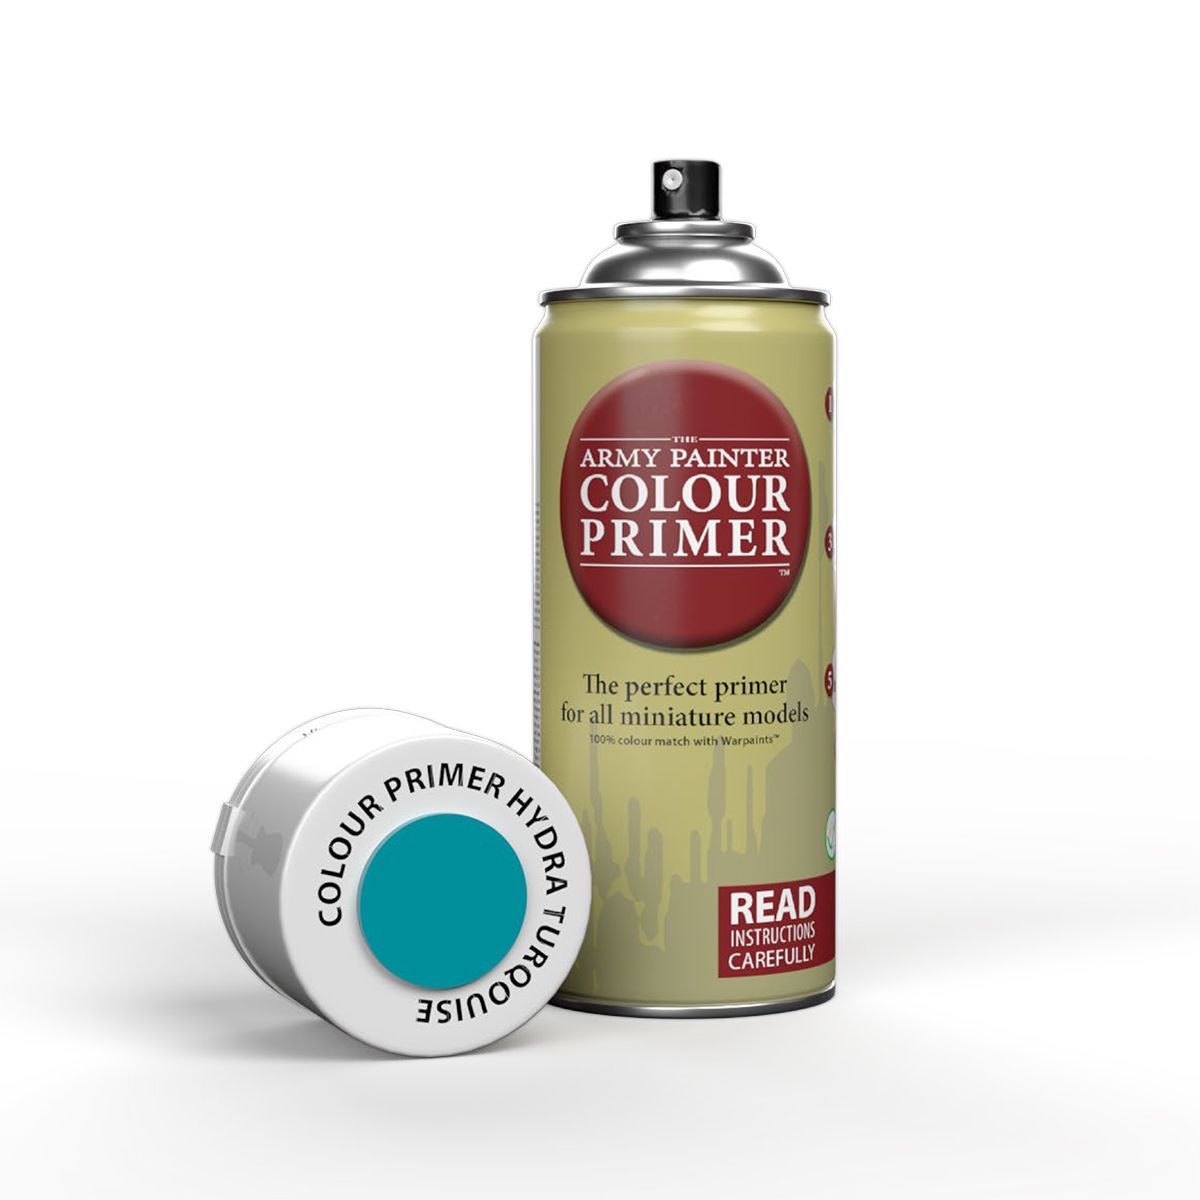 The Army Painter - Colour Primer Spray